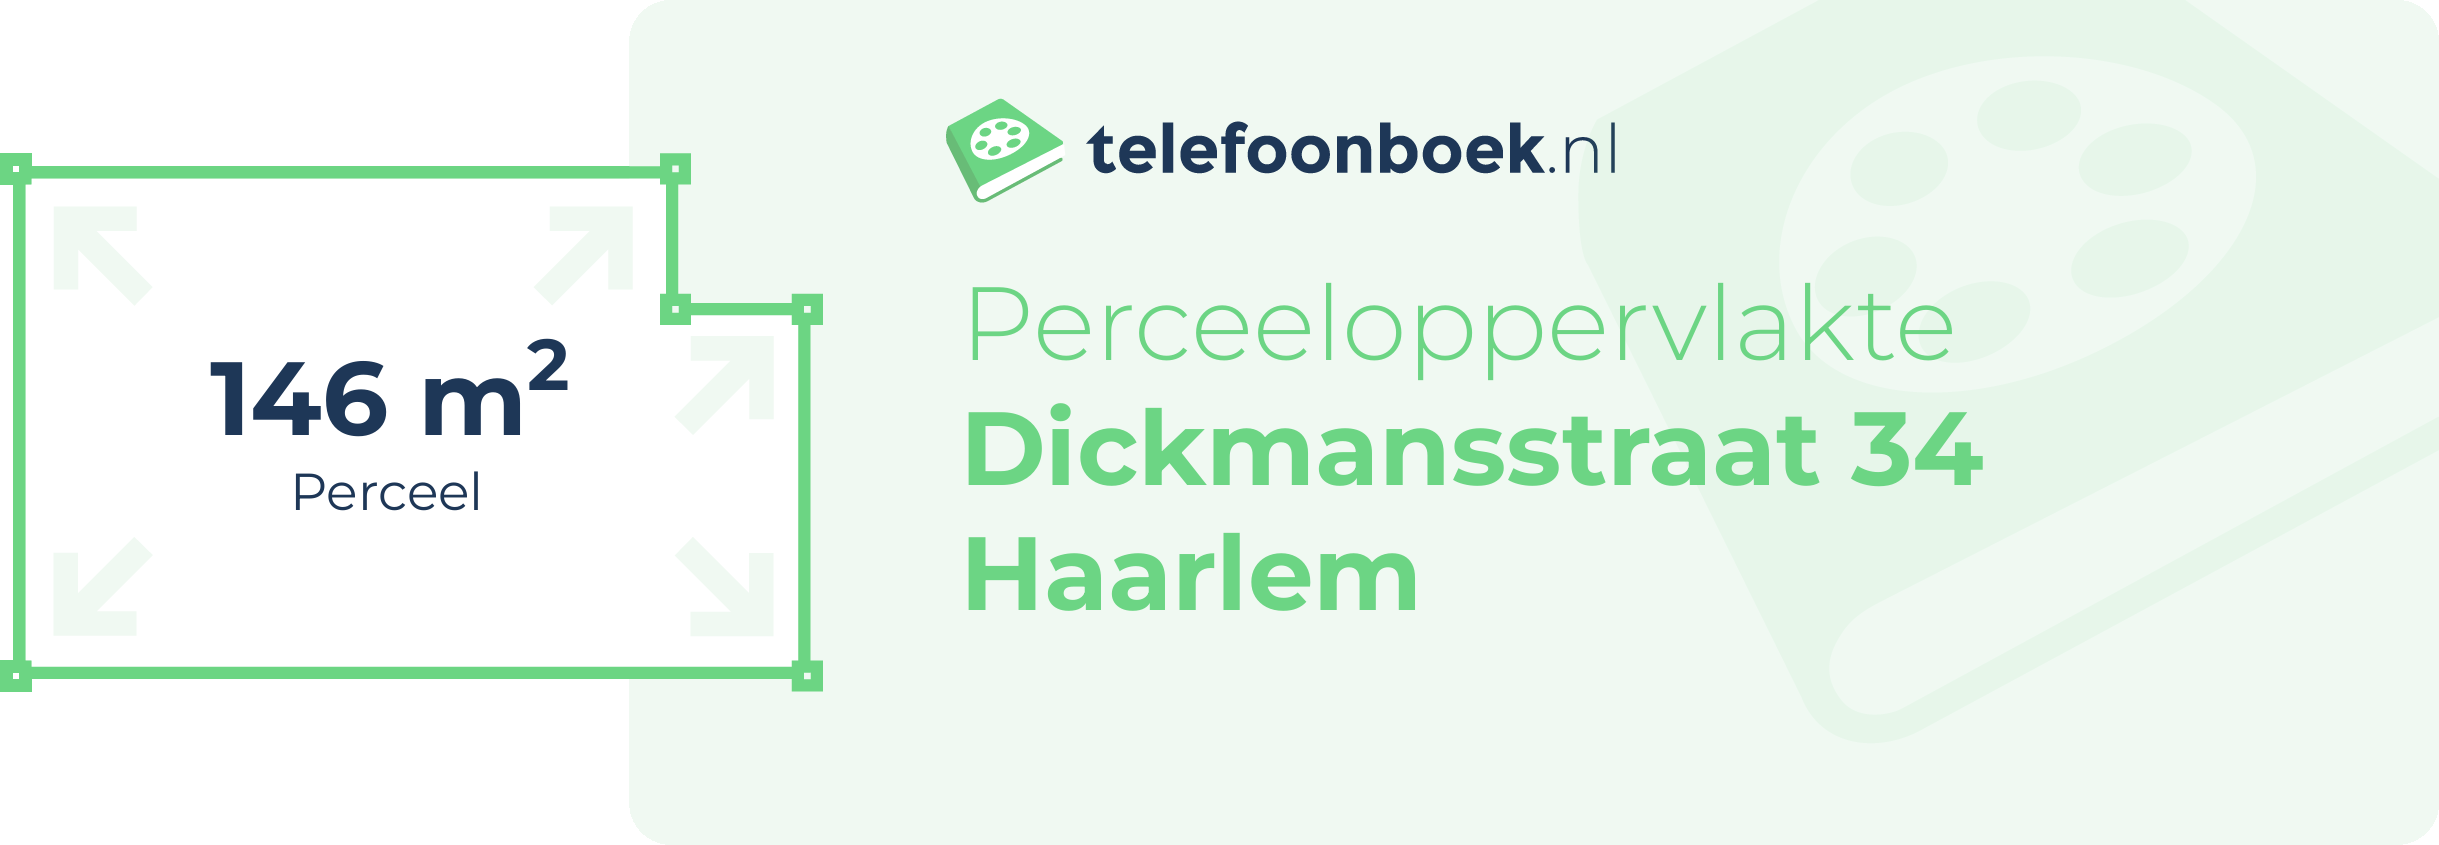 Perceeloppervlakte Dickmansstraat 34 Haarlem